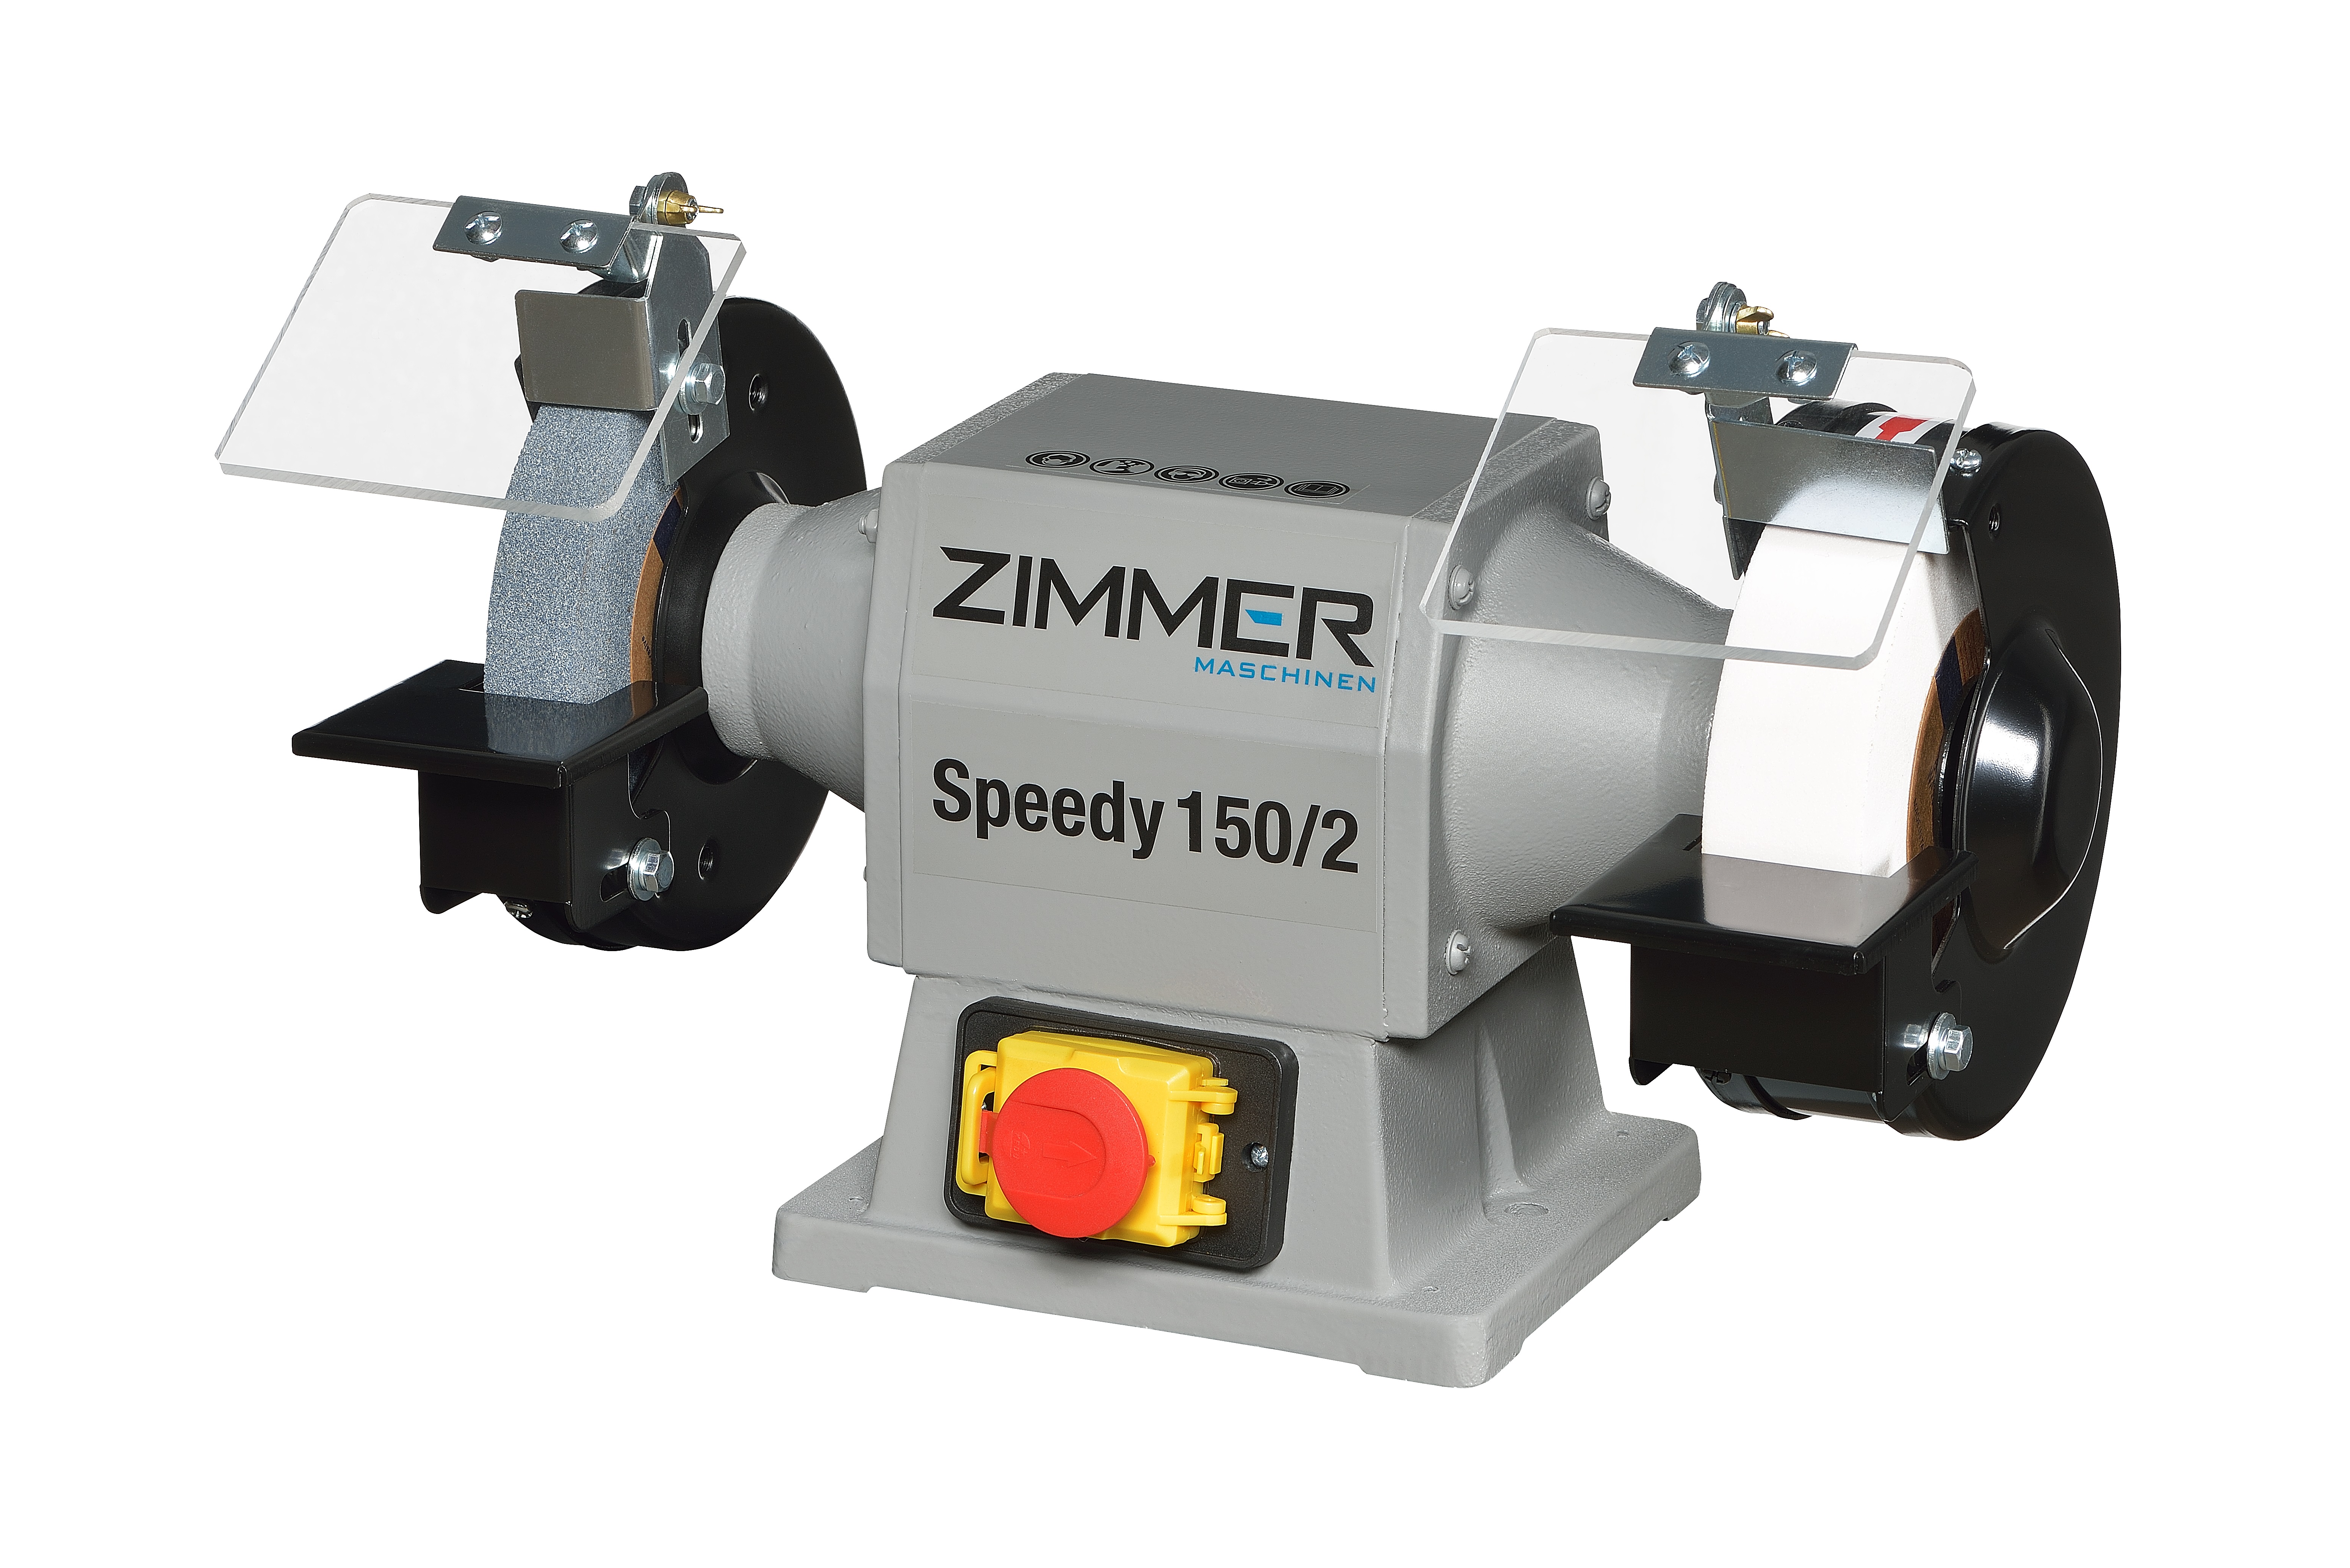 ZIMMER Doppelschleifmaschine Modell SPEEDY 150/2 (1x Korund A36 - 150x25x20mm / 1x weiß finishing A100 serienmäßig 150x40x20mm) 2.850 1/min. - 0,45kW - 230V